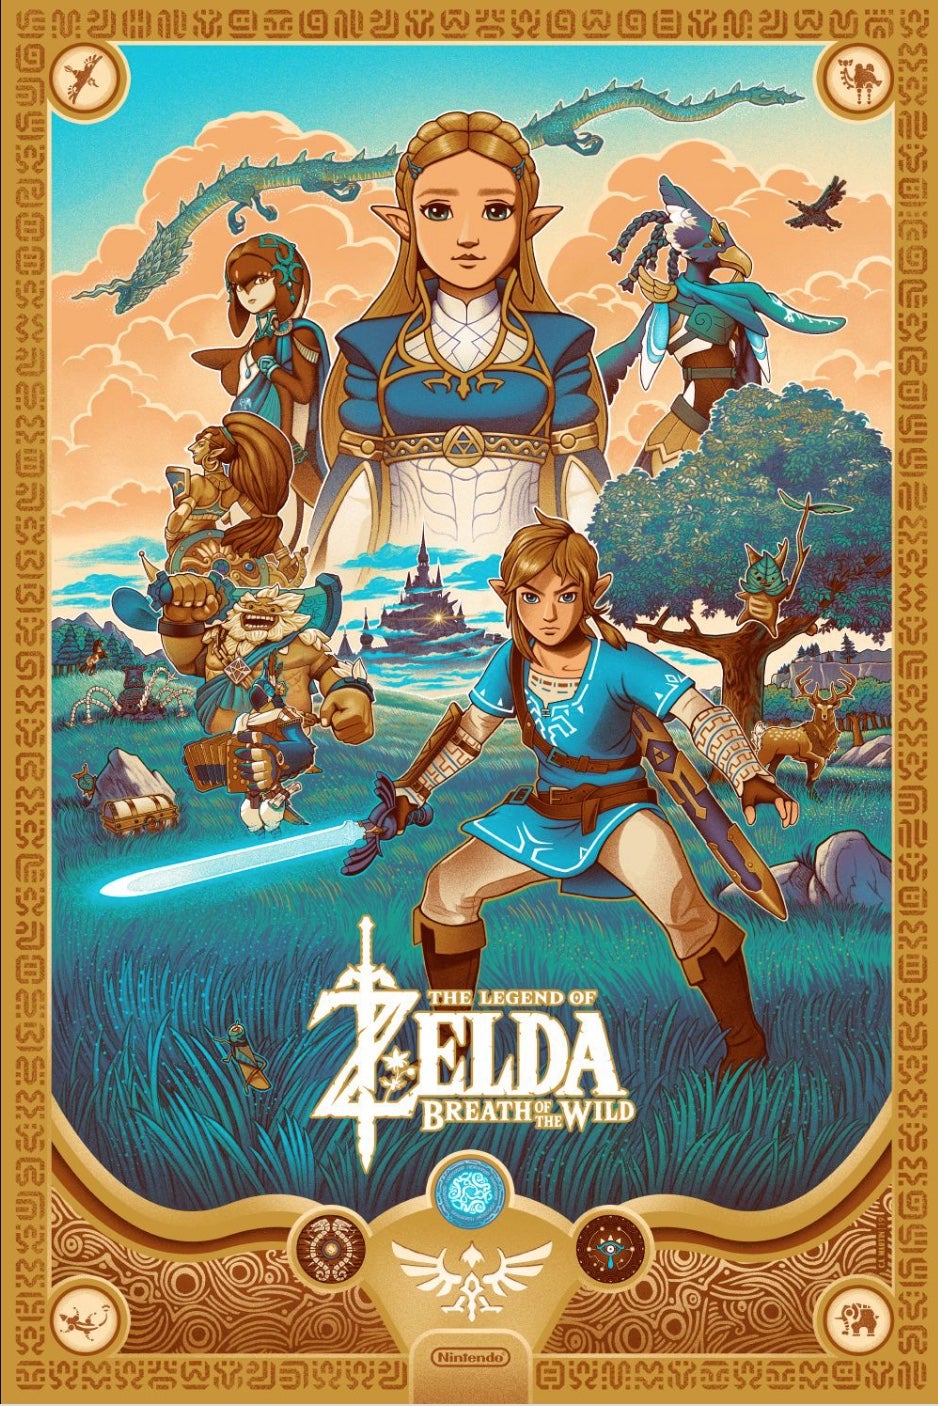 Celebrate The Legend of Zelda: Tears of the Kingdom With This Fantastic Zelda Art